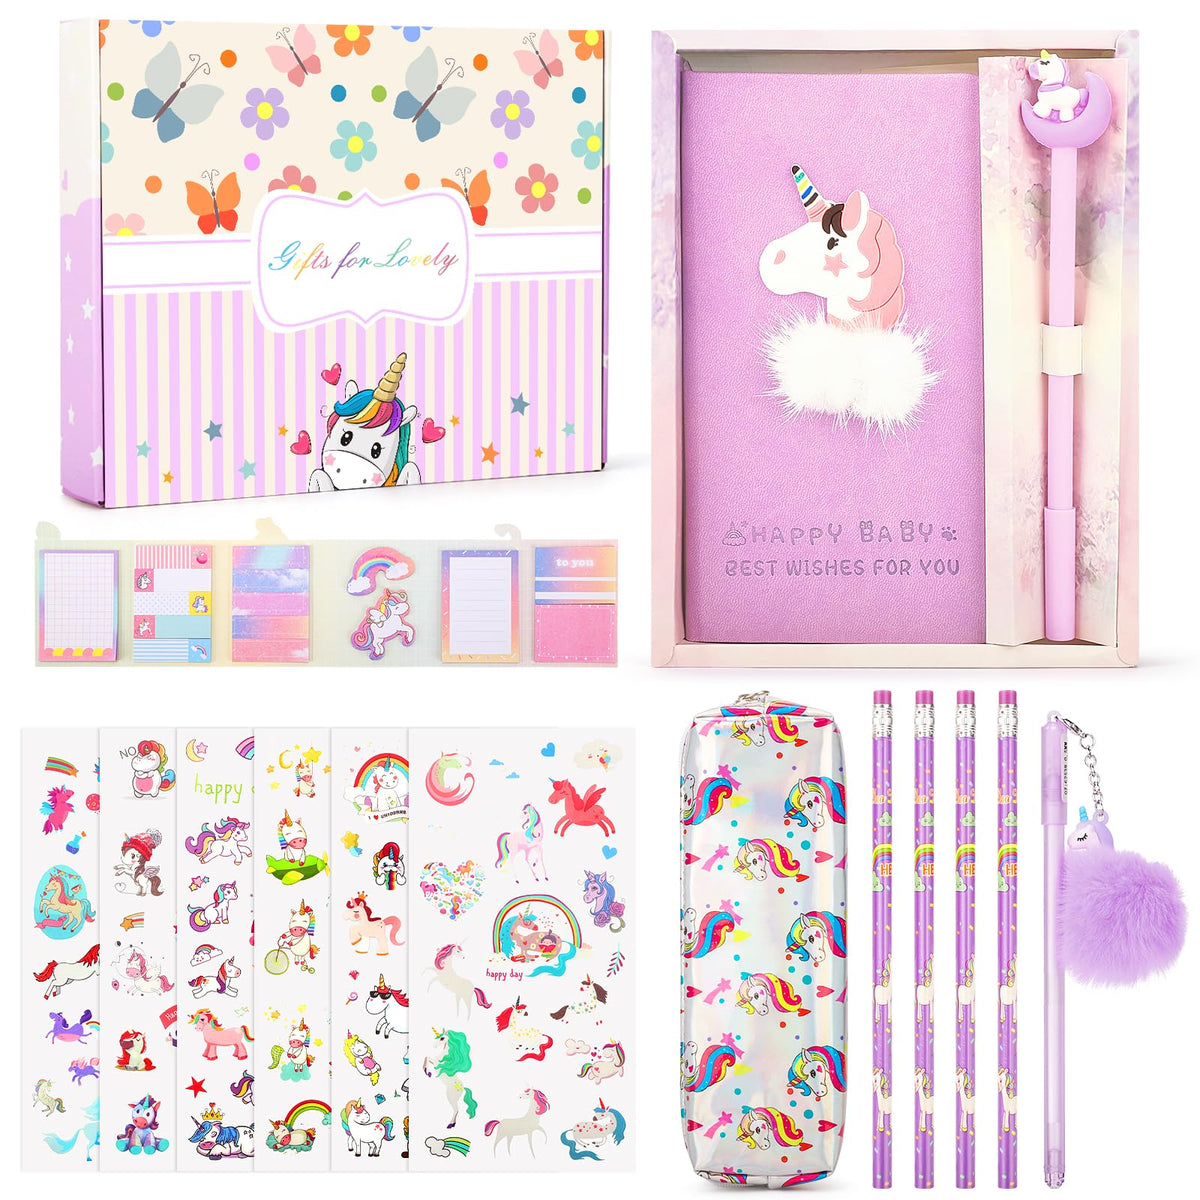 Maomaoyu Unicorn Stationary Sets for Girls, Girls Stationary Gift Sets with Unicorn Gift Box, Pencil Case & Stickers, Unicorn Birthday & Christmas Gifts for Girls Age 4 -12, Purple